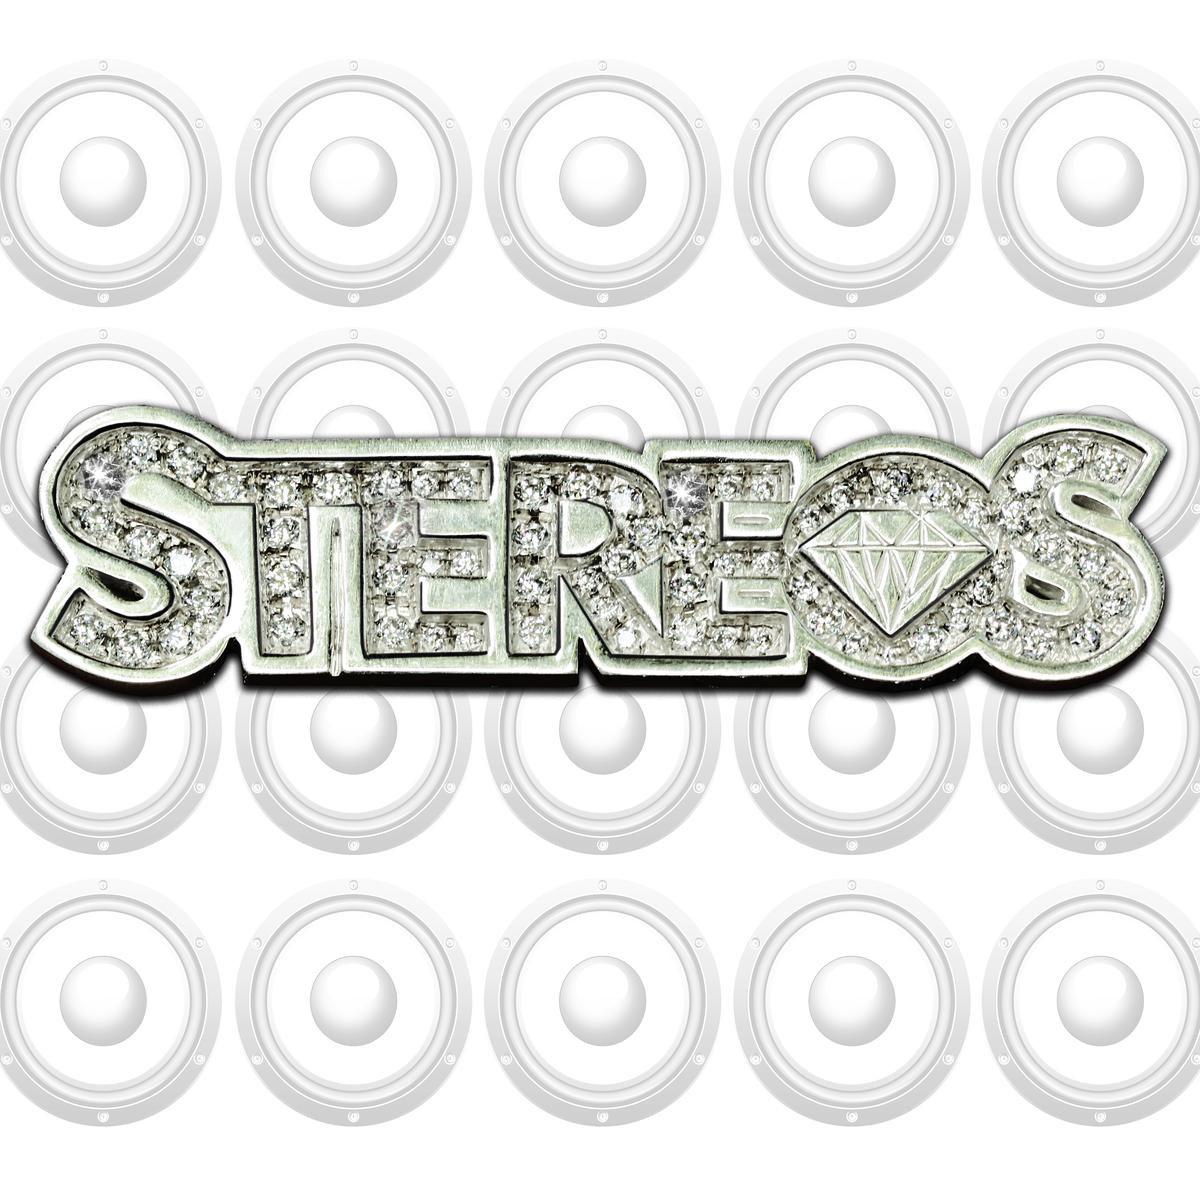 Stereos - Addicted